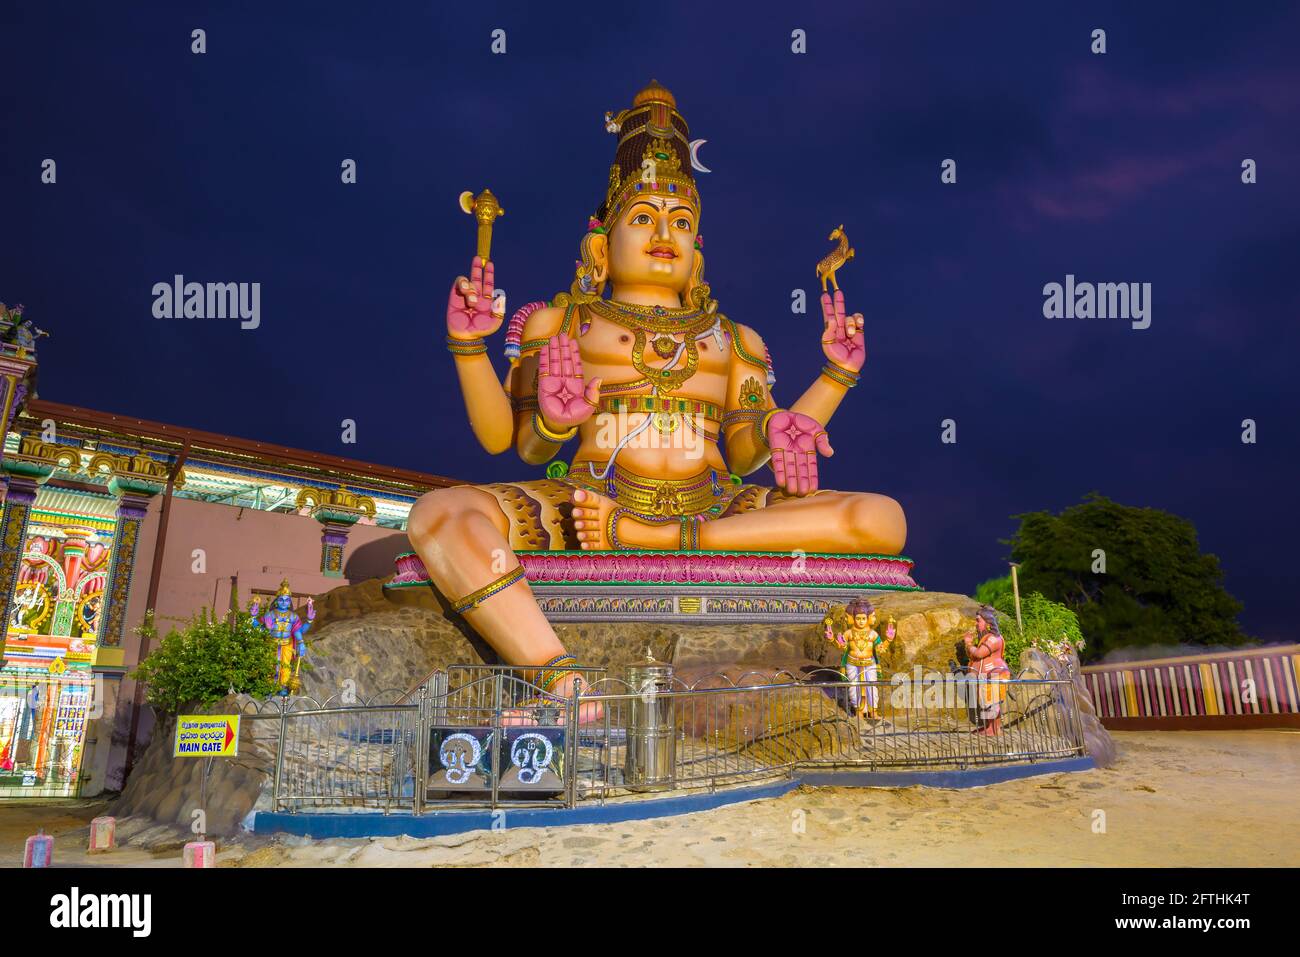 TRINKOMALI, SRI LANKA - FEBRUARY 11, 2020: Giant statue of Shiva close-up. Hindu temple complex Koneswaram Temple Stock Photo